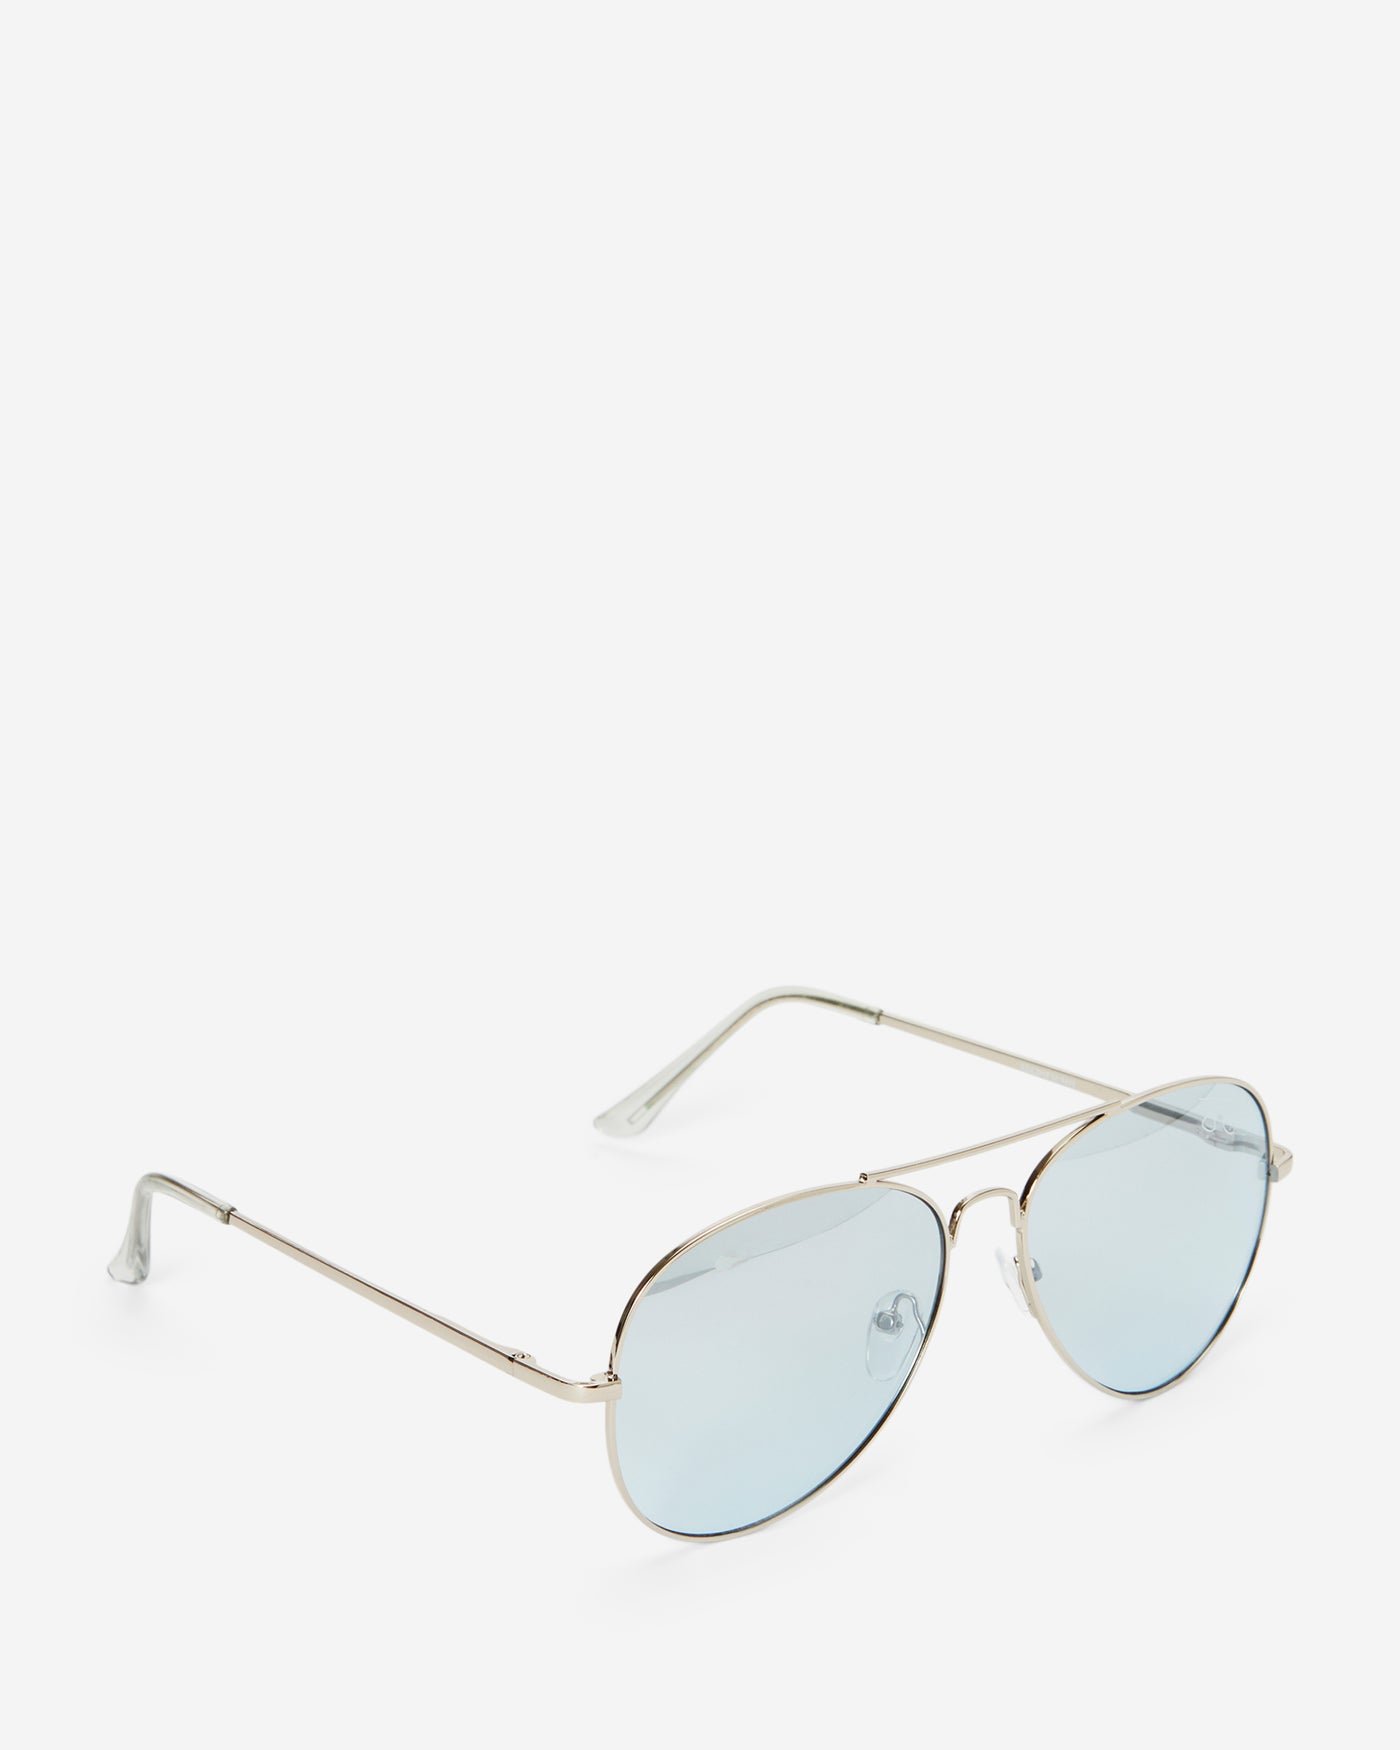 Classic Aviator Sunglasses - Light Gold Metal Frame with Blue Lens Sunglasses Joey James, The Label   